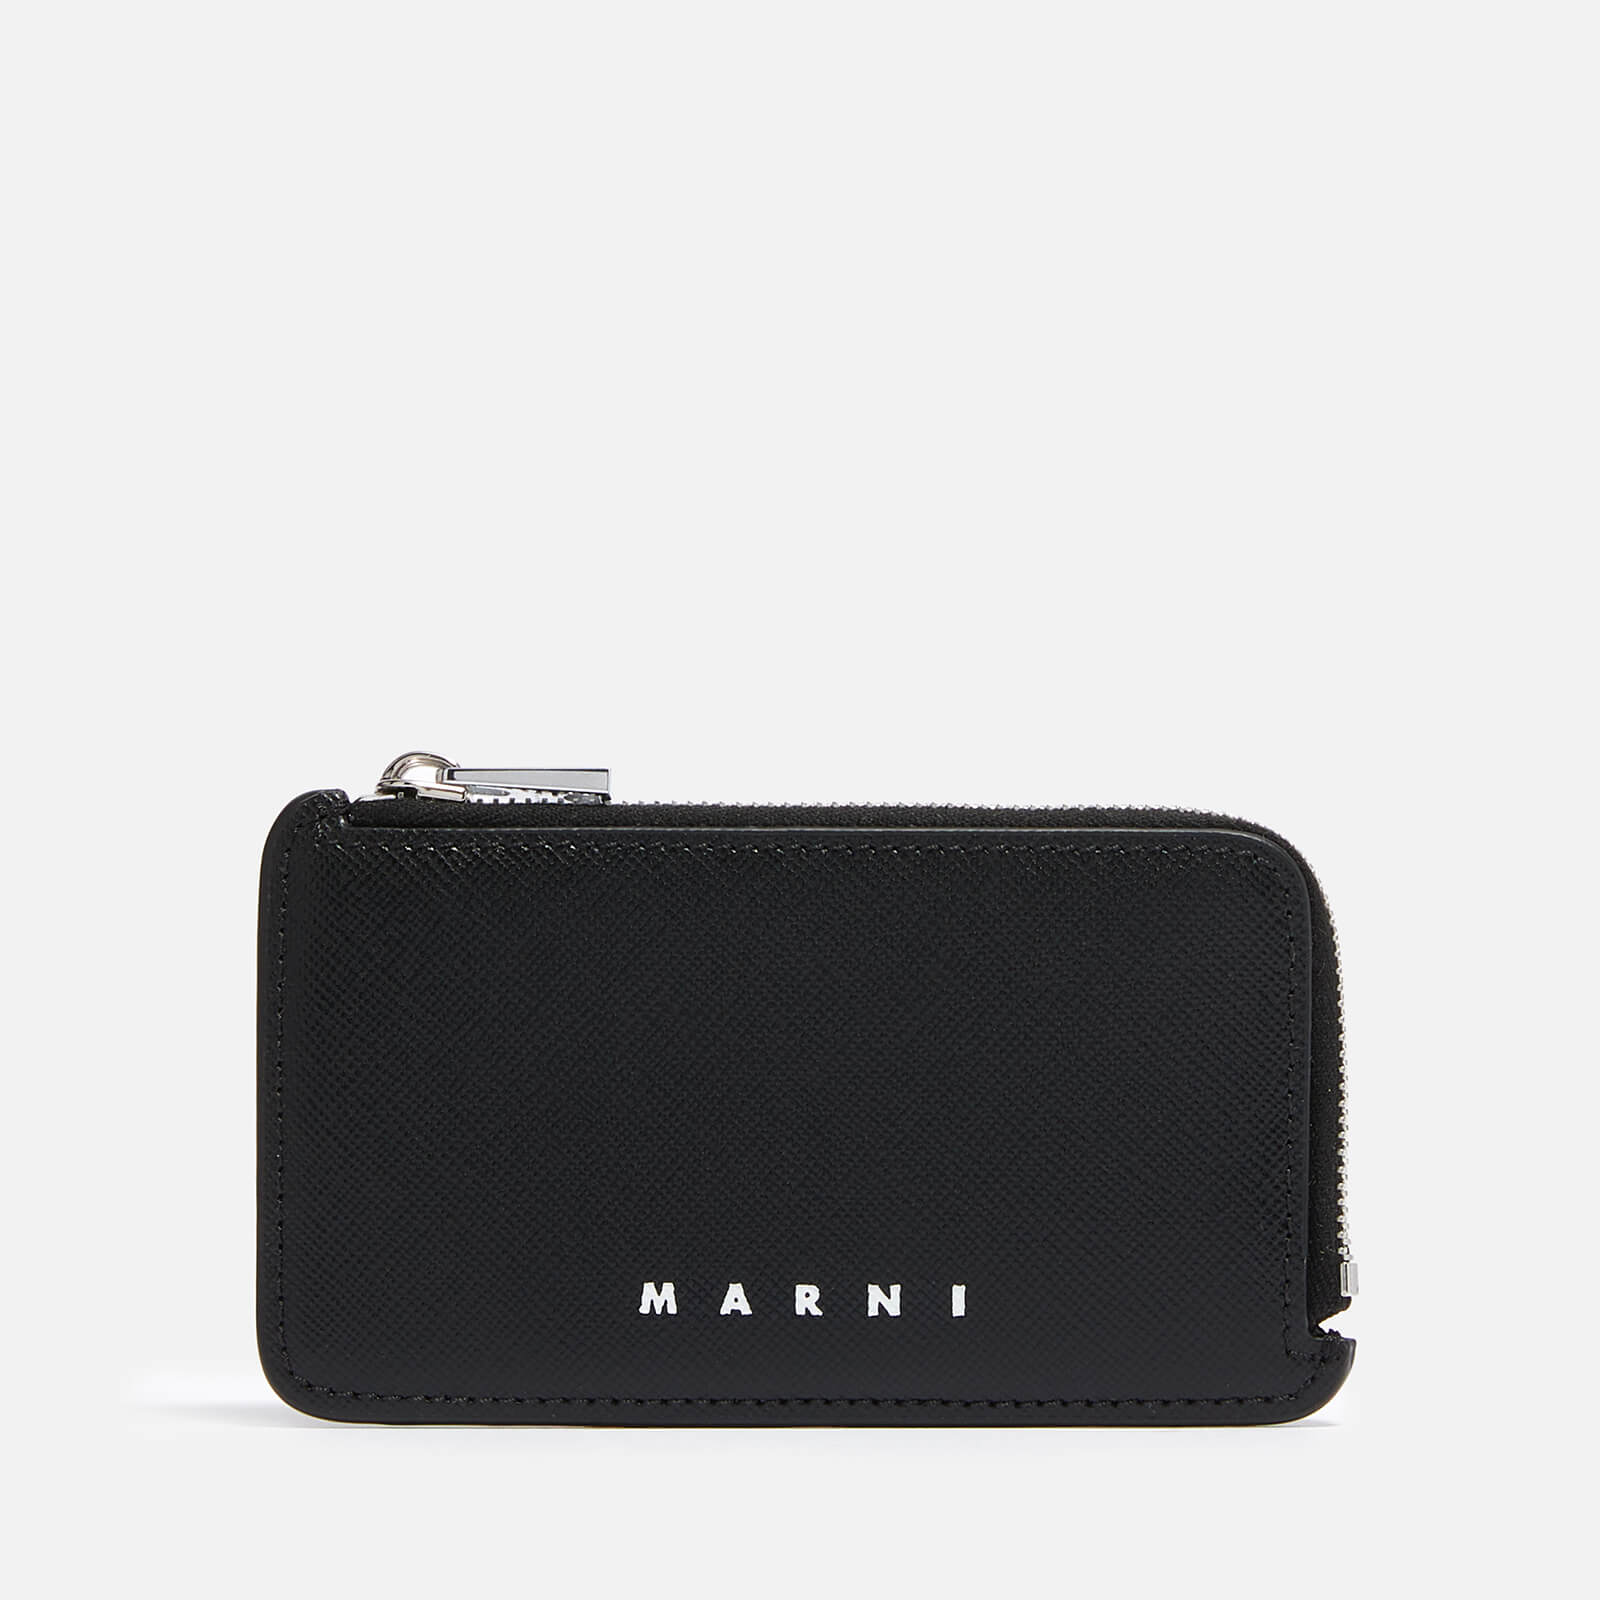 Marni Men's Zip Coin Card Holder - Black/Blu Black - One Size